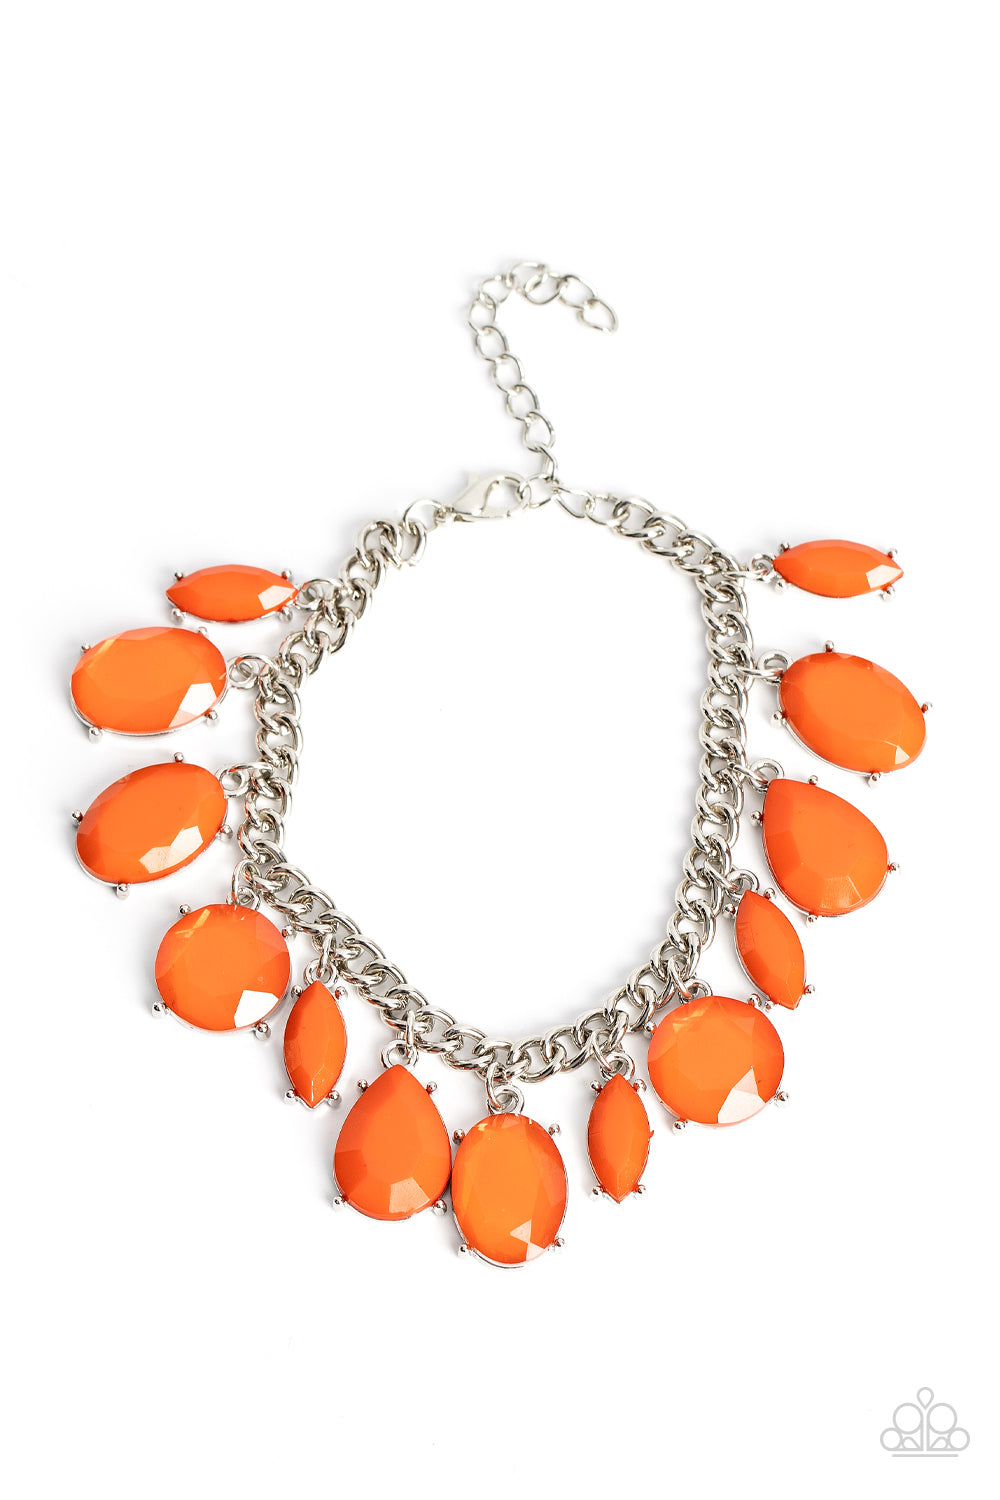 Serendipitous Shimmer - Orange Paparazzi Bracelet